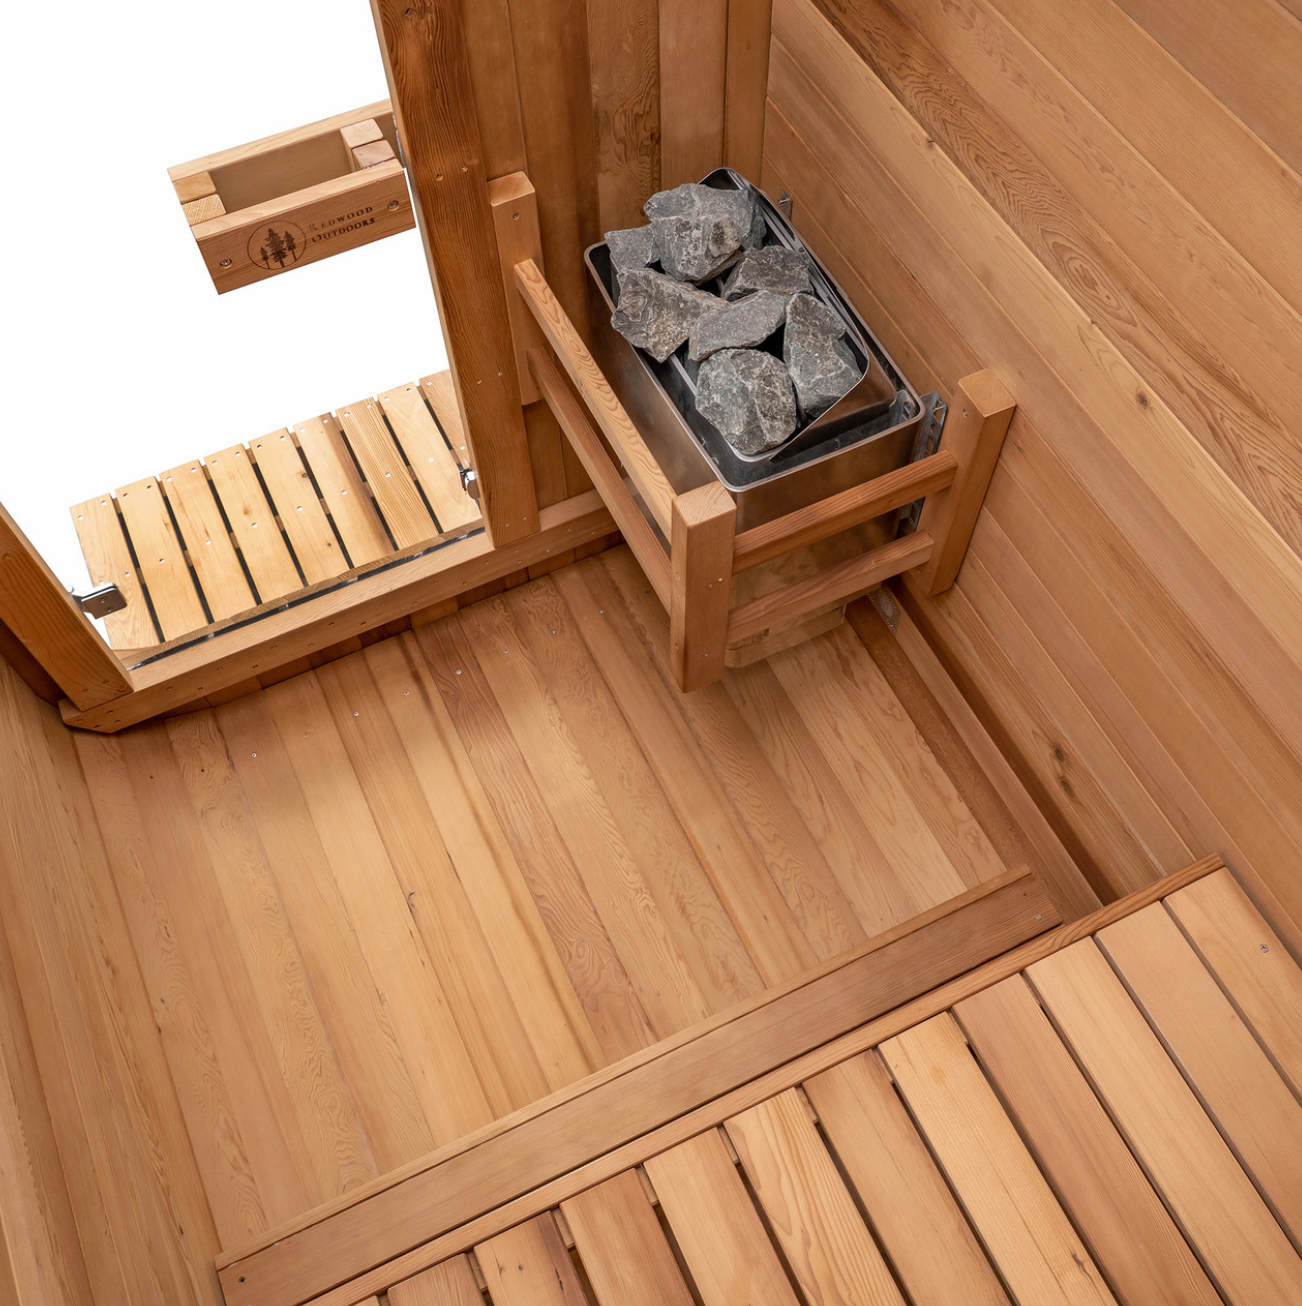 redwood thermowood mini cube outdoor sauna - interior